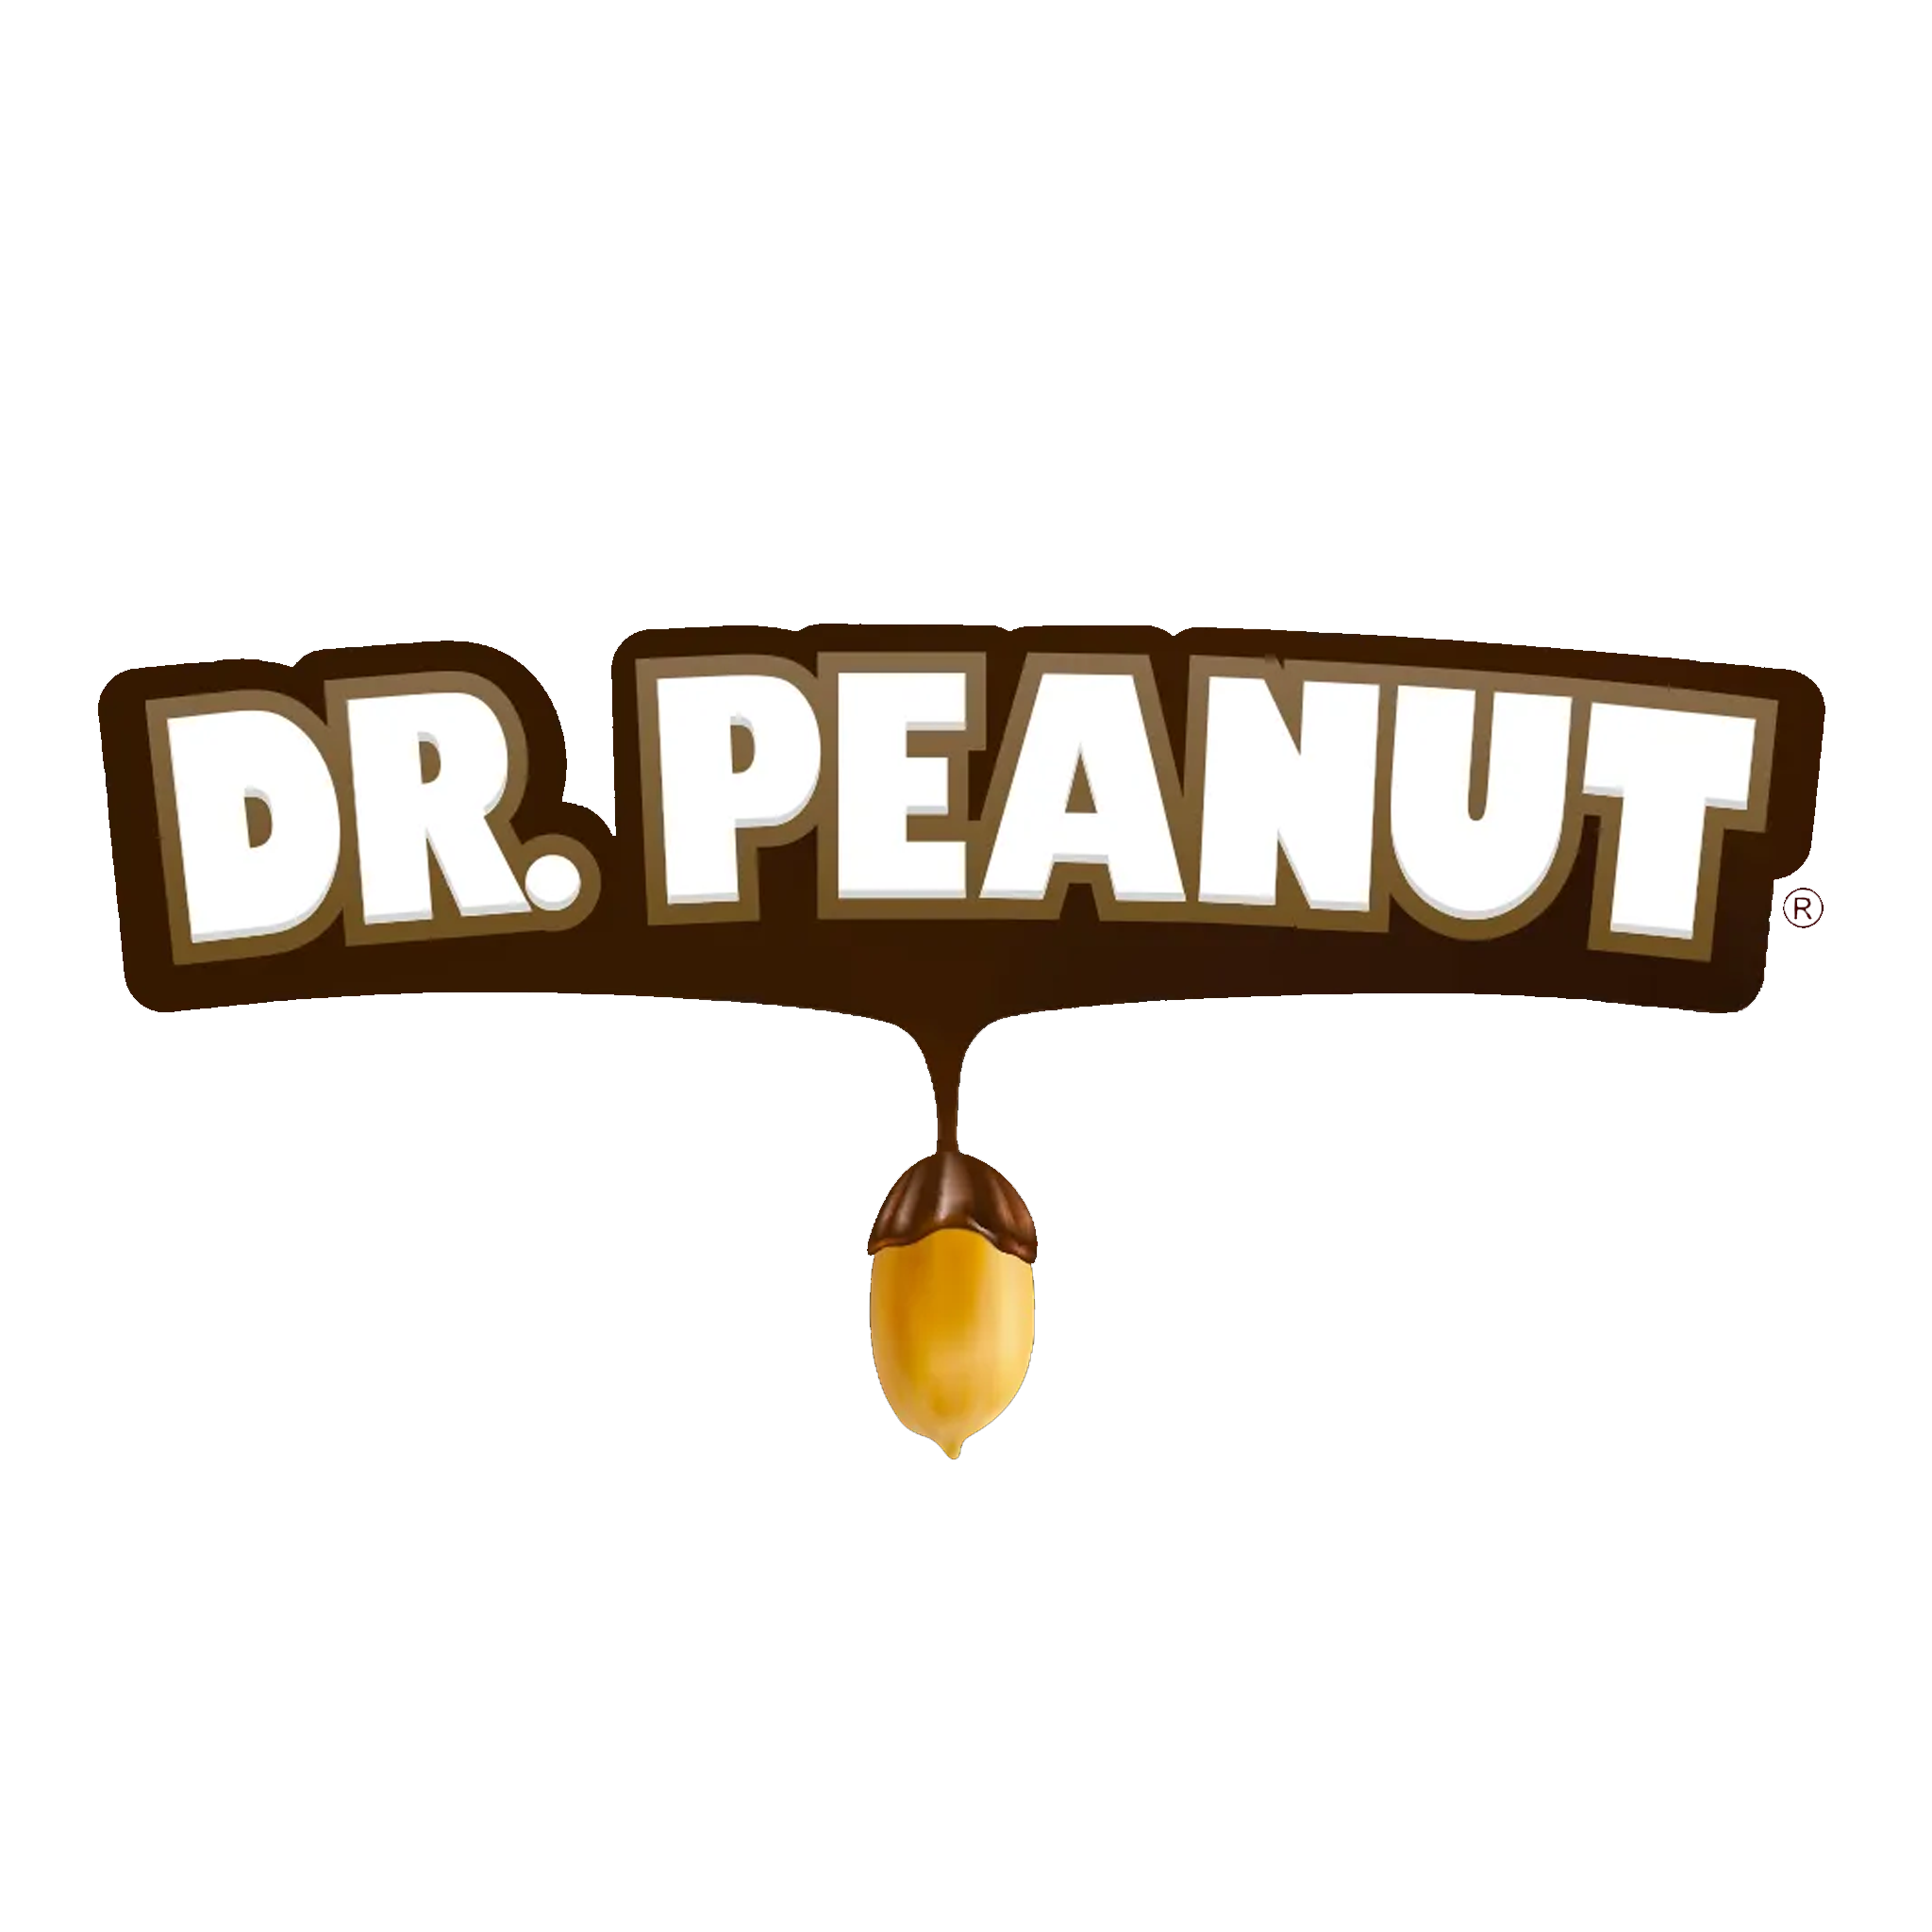 dr peanut